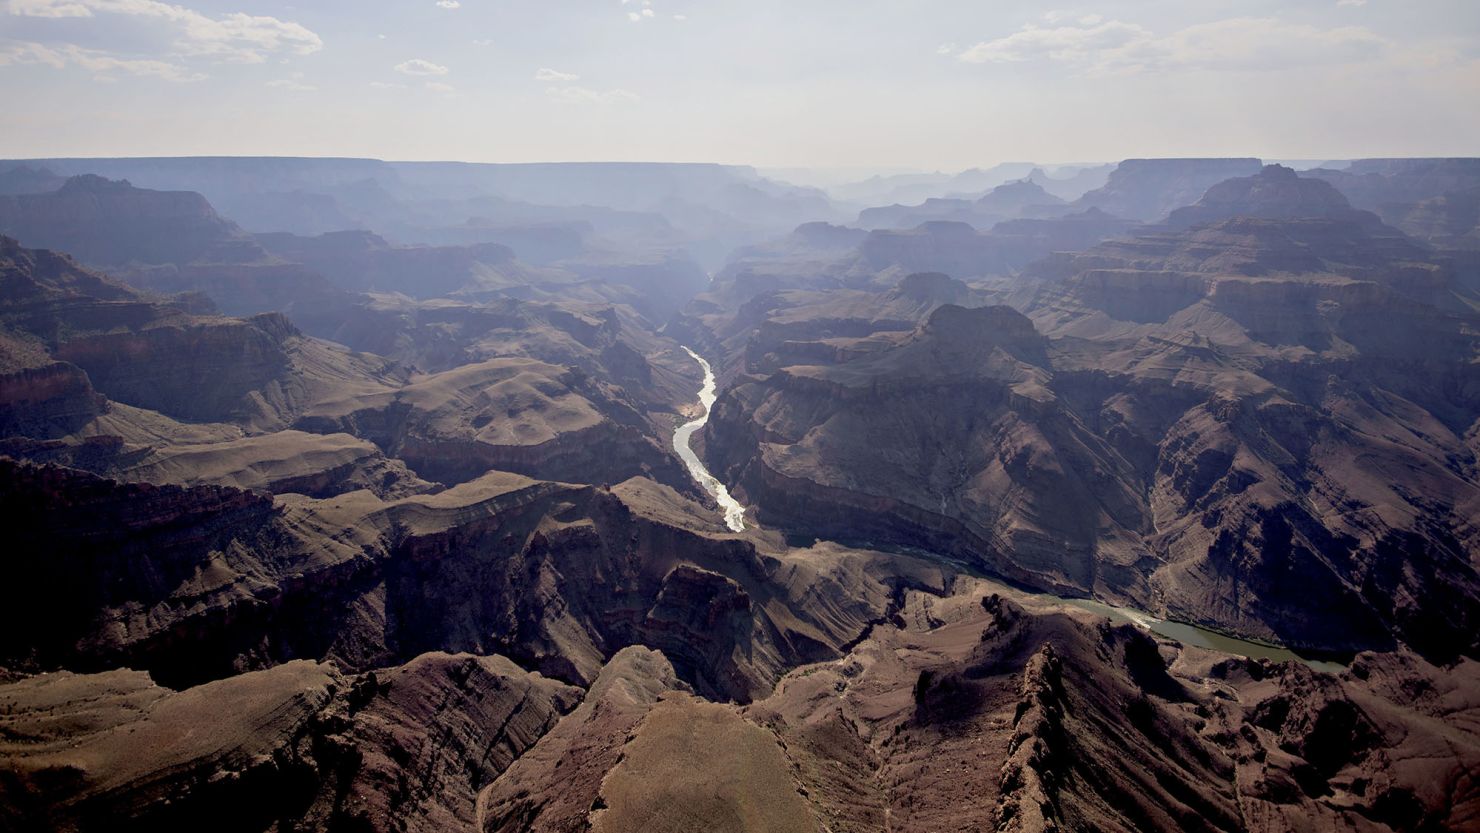 The Colorado River runs through Grand Canyon National Park in this aerial photograph taken above Grand Canyon, Arizona.